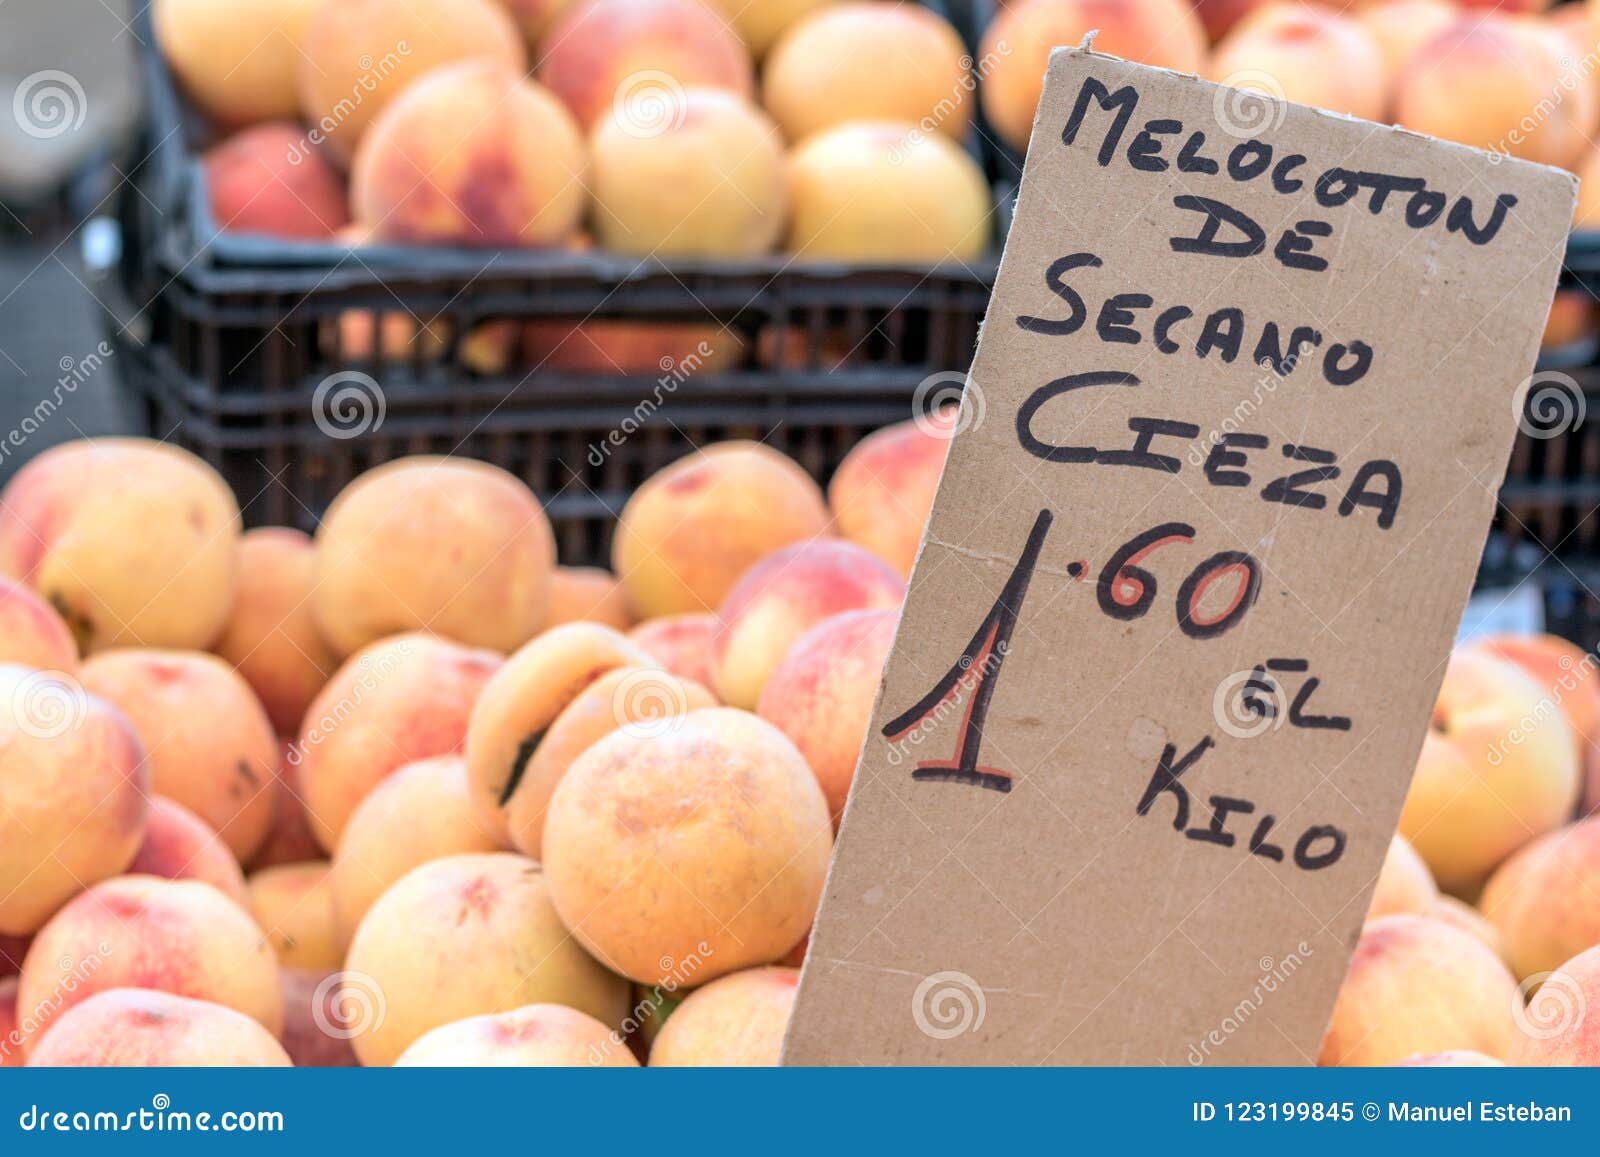 peaches in street market torrevieja, spain